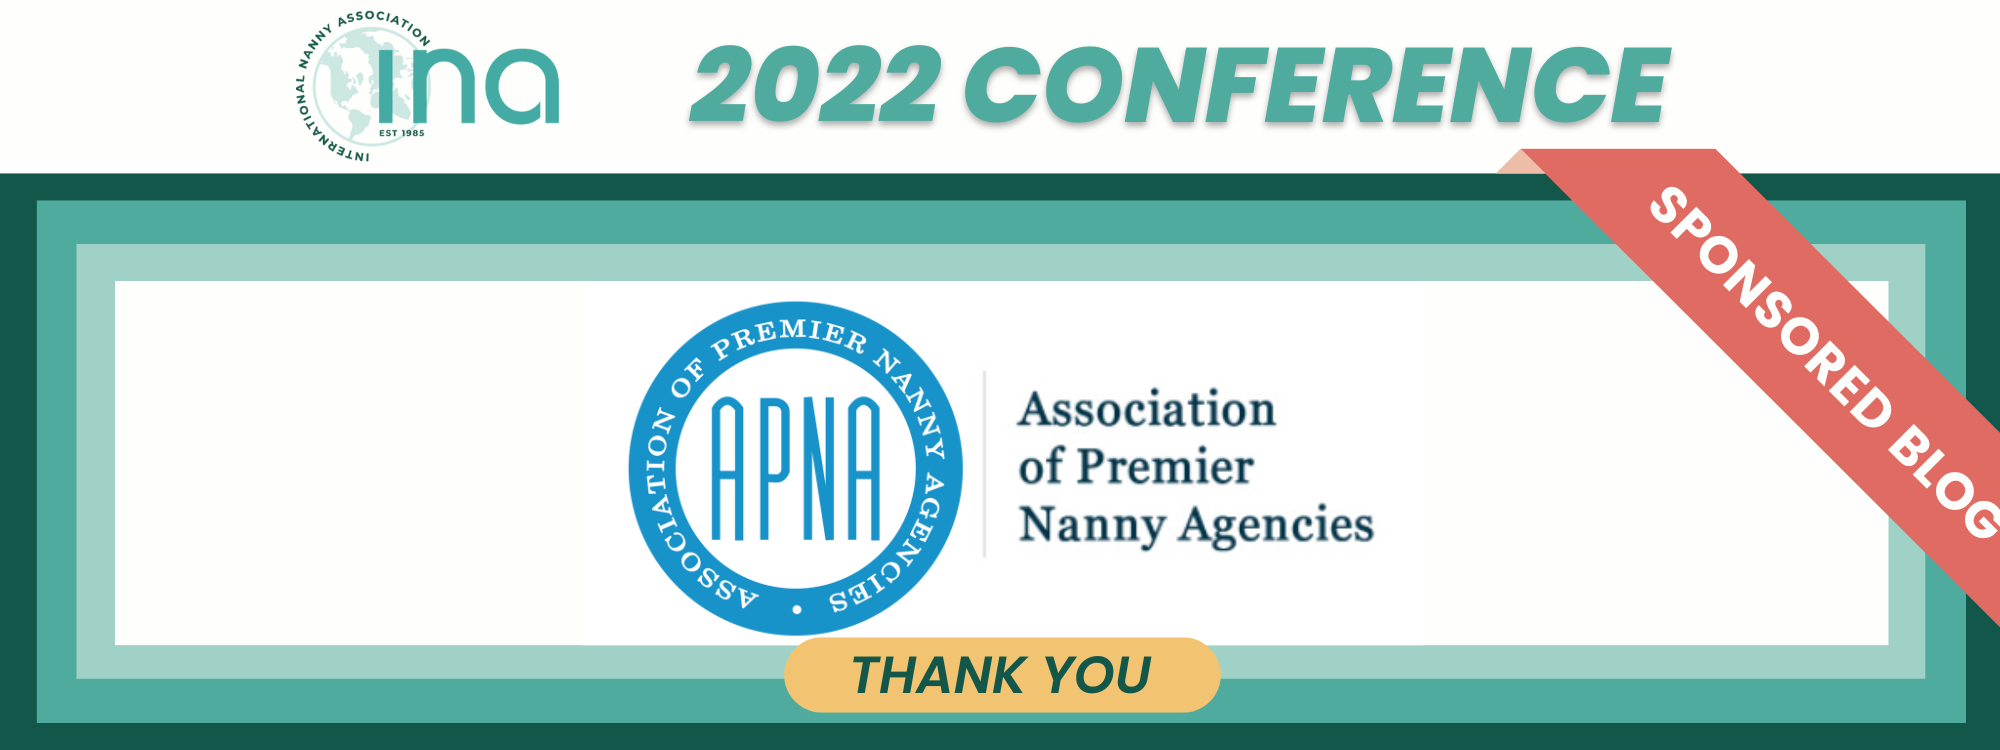 Sponsored Blog 2022 Conference APNA